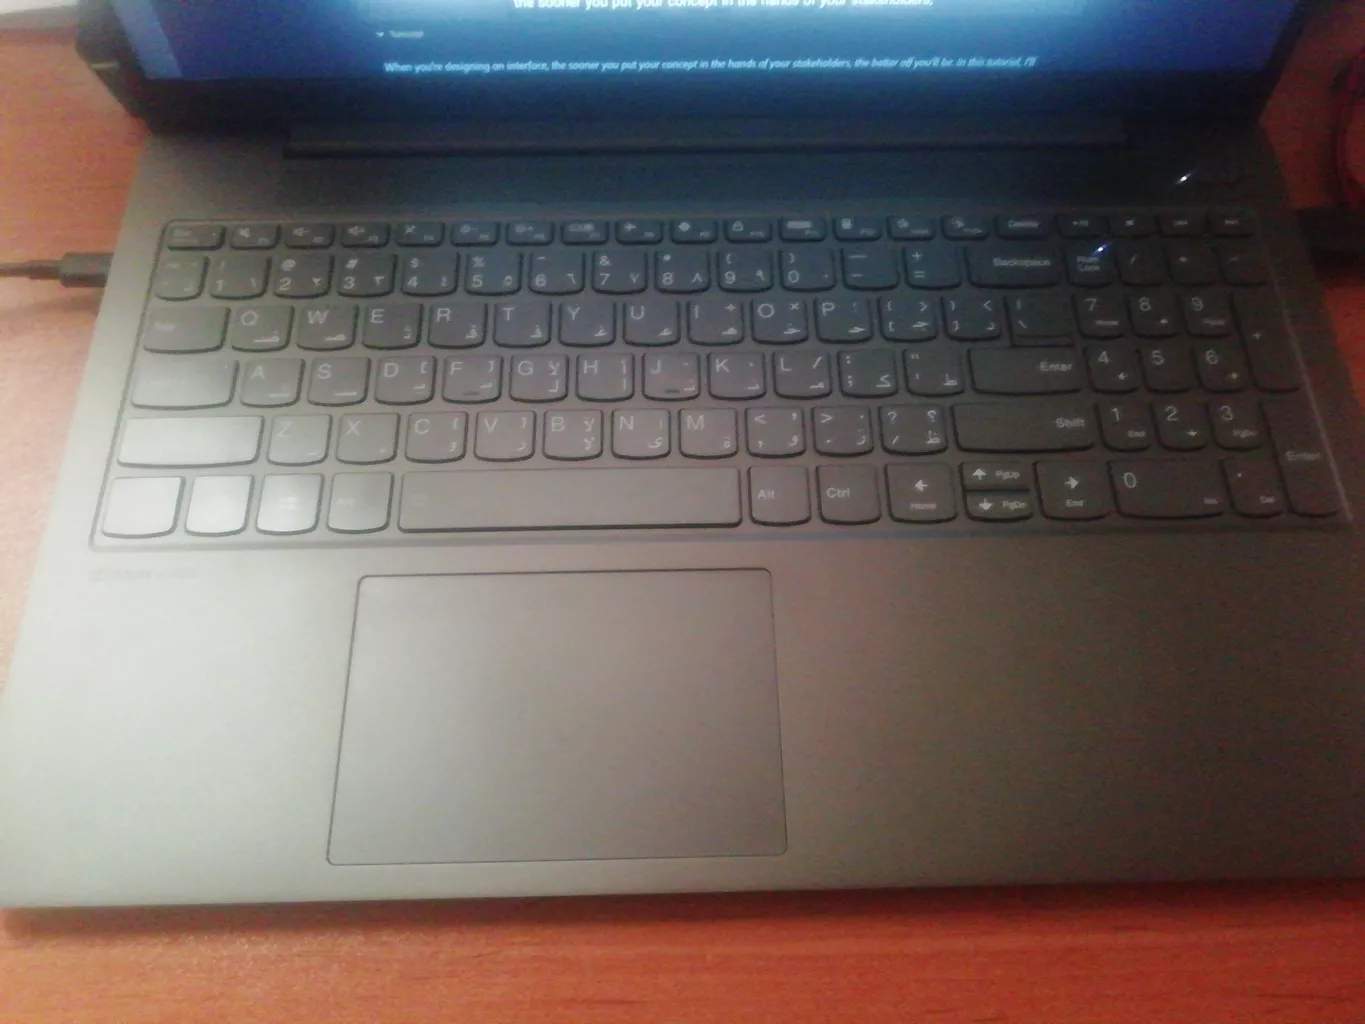 لپ تاپ 15 اینچی لنوو مدل IdeaPad 5-A